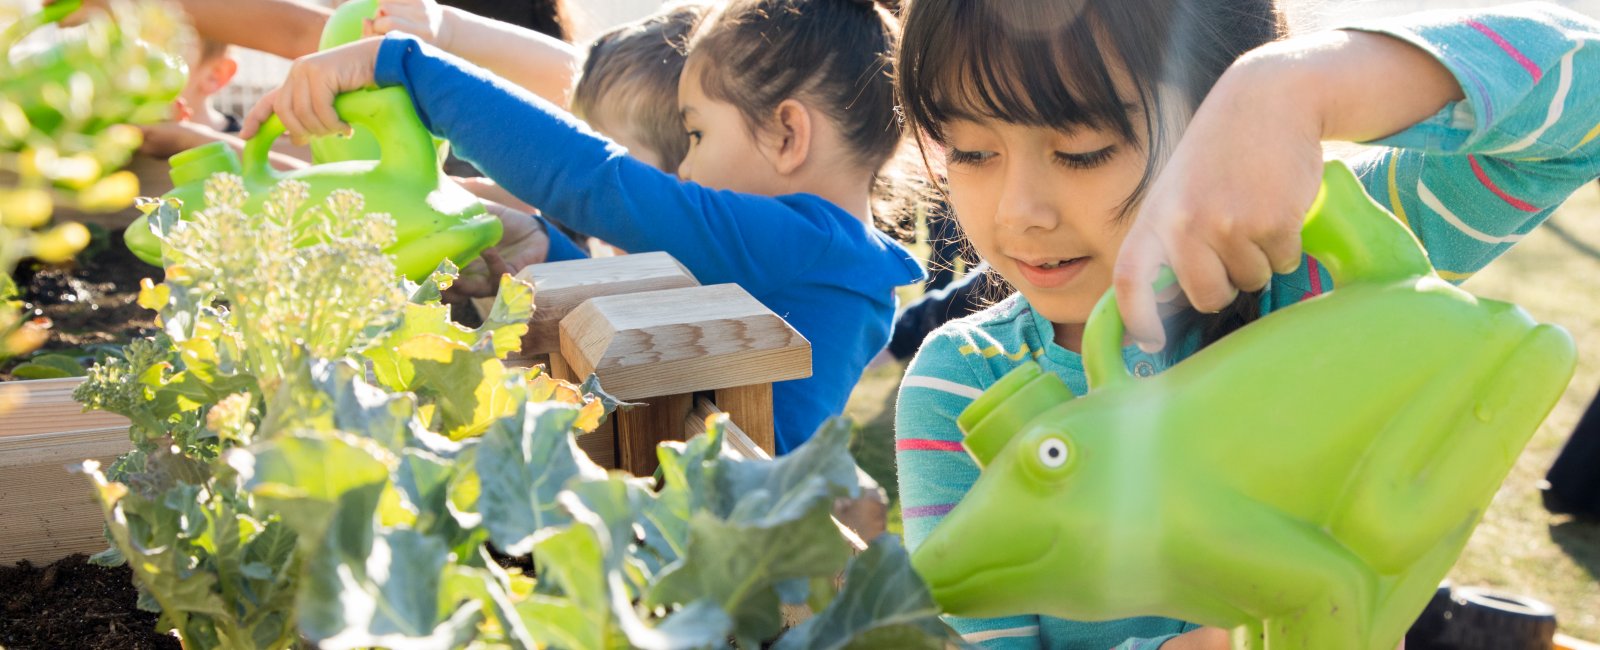 Children water greens as part of HonorHealth Desert Mission’s gardening education. 